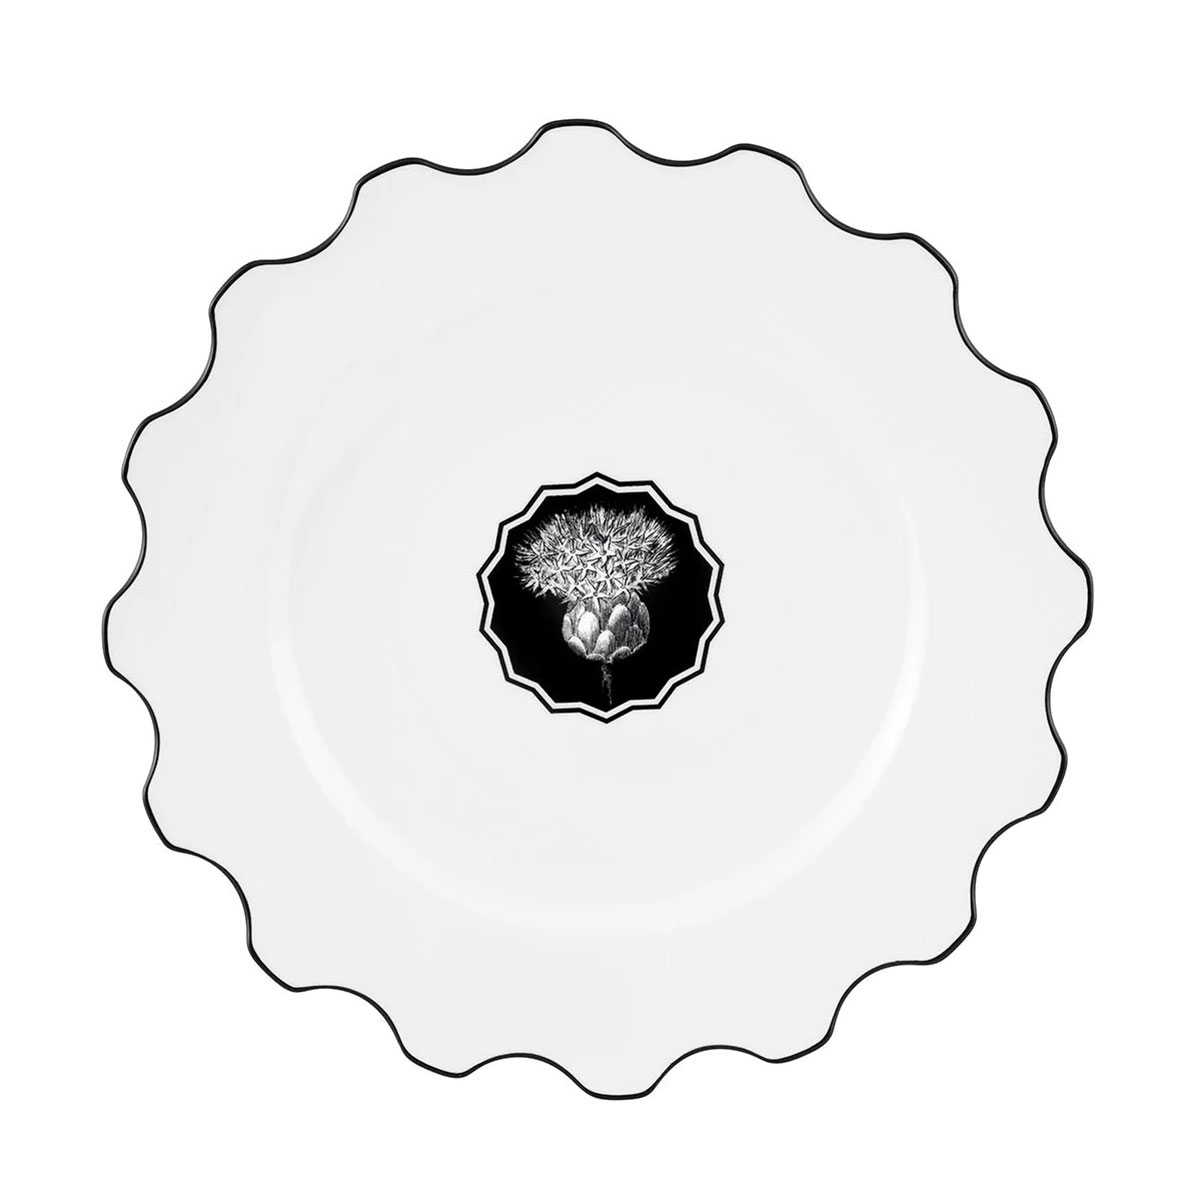 Vista Alegre Porcelain Christian Lacroix - Herbariae Dinner Plate